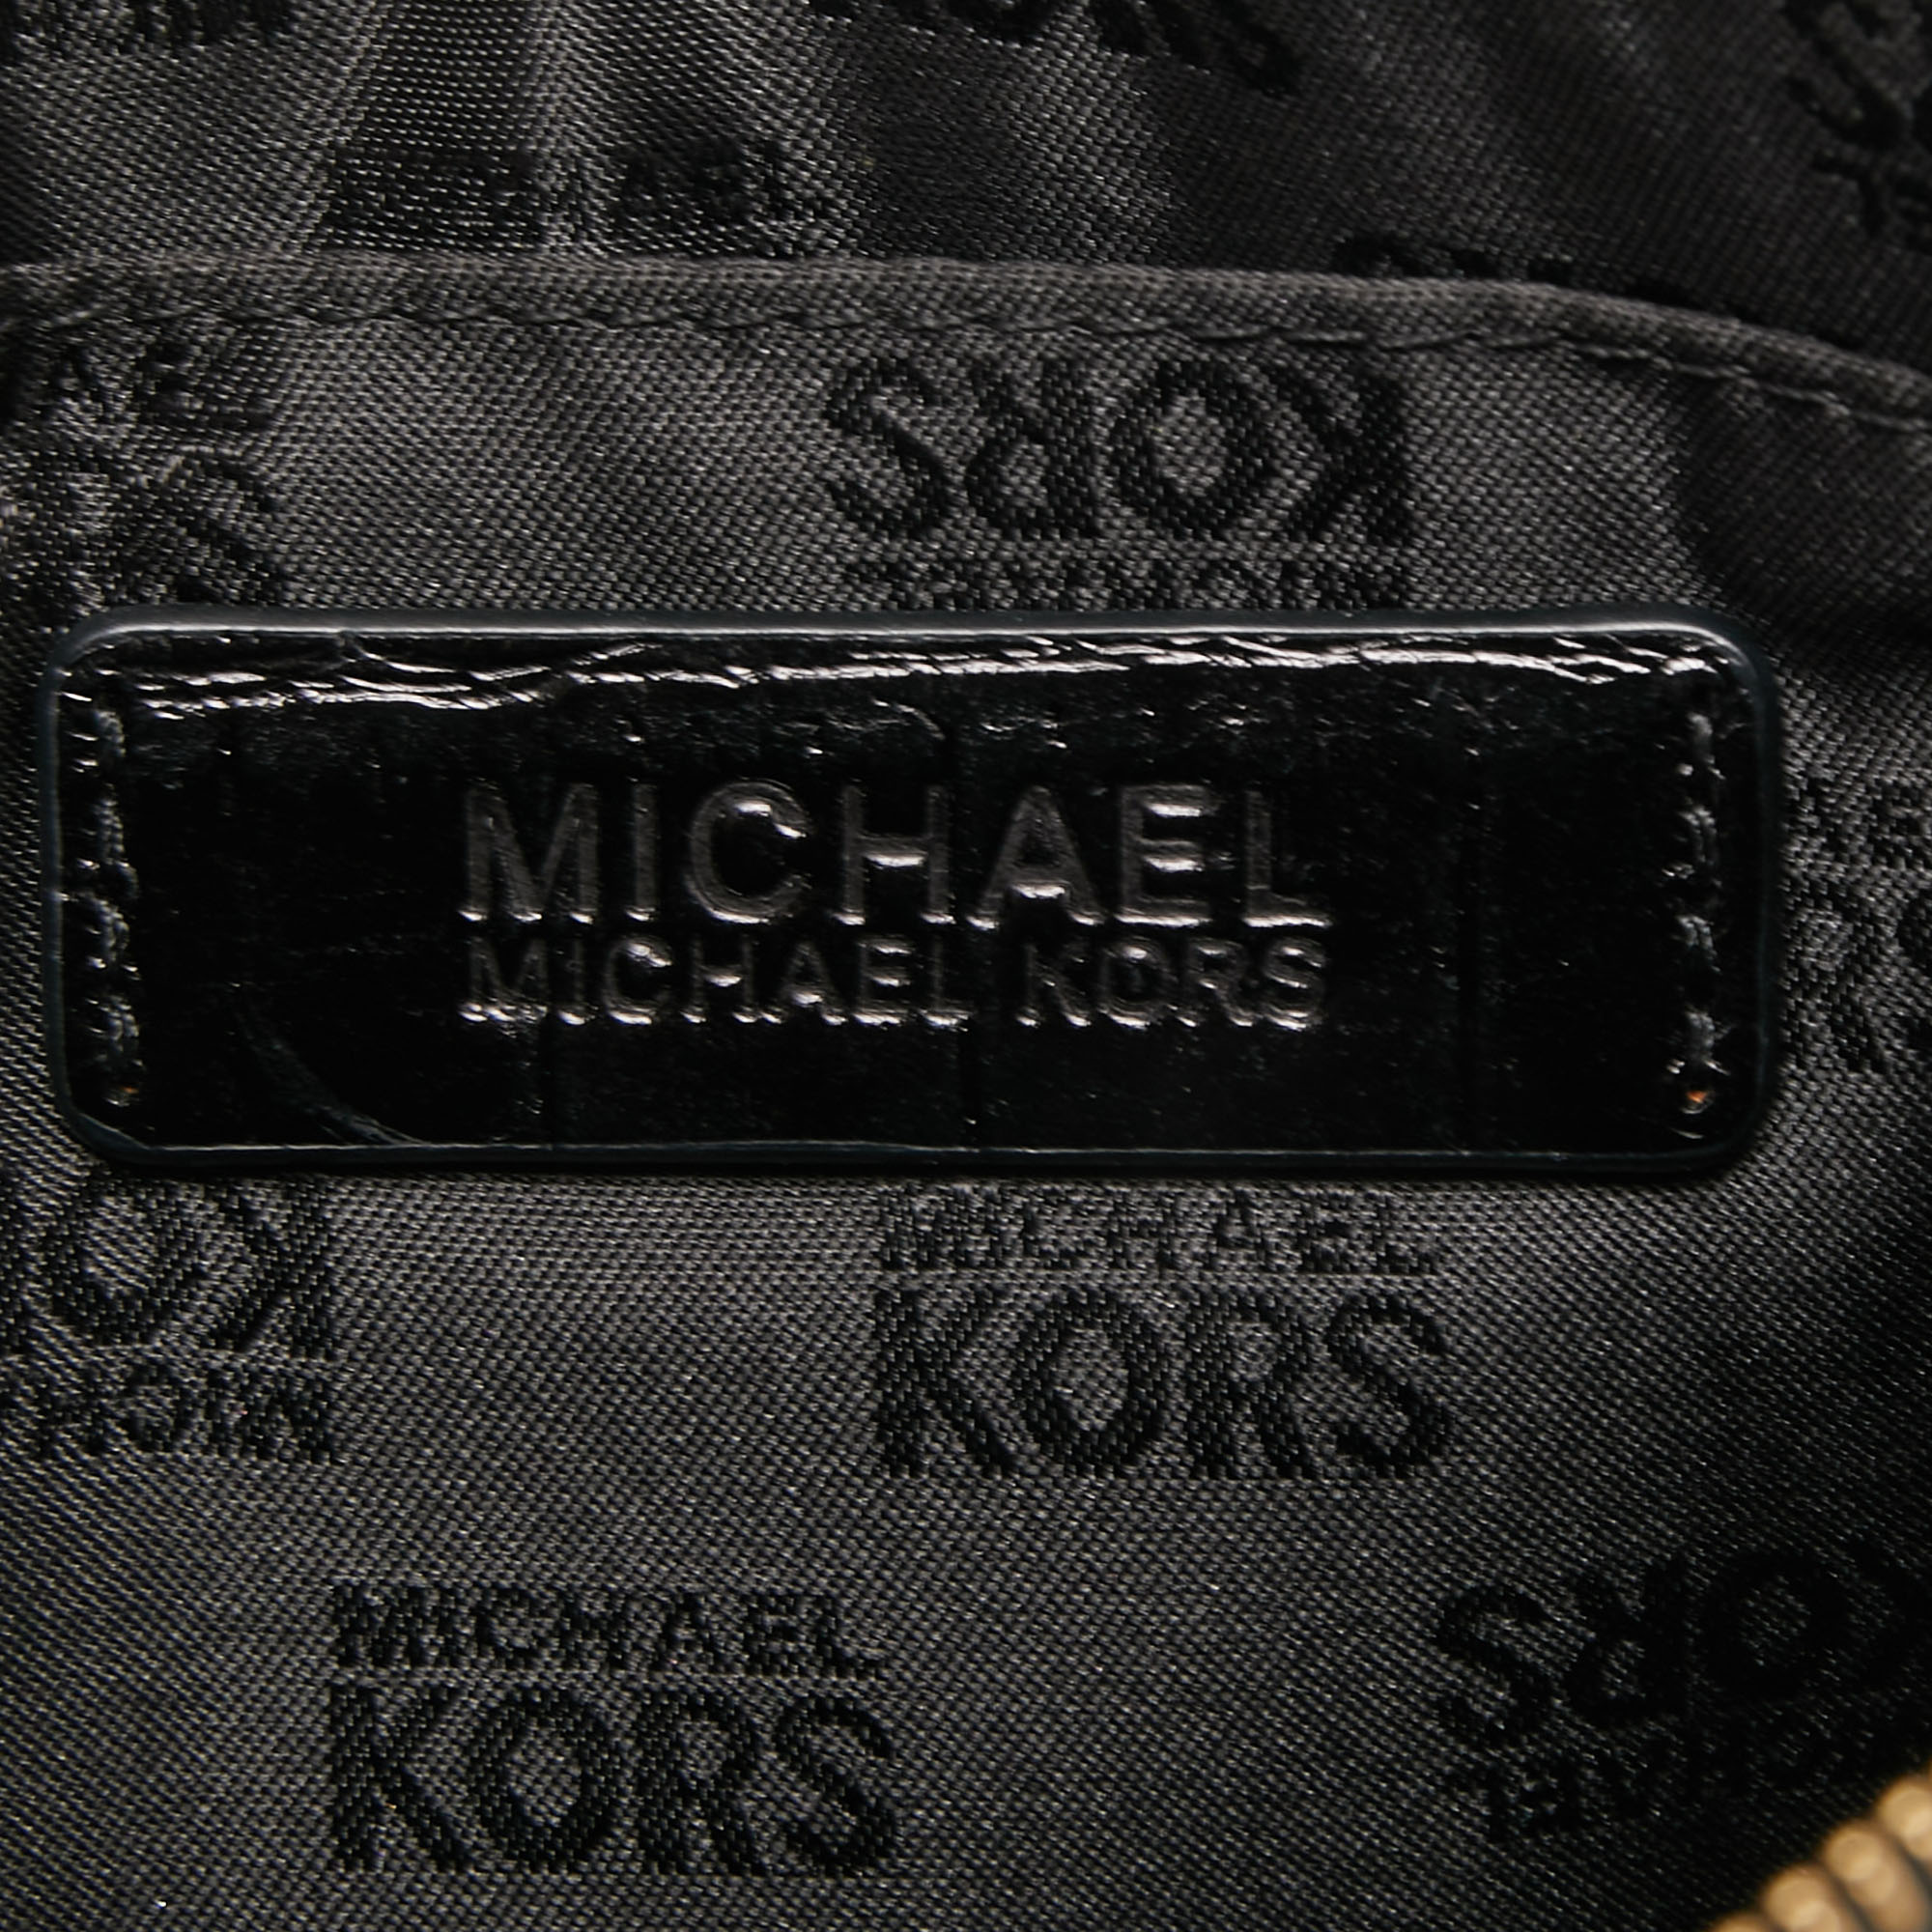 Michael Kors Black Croc Embossed Leather Wristlet Clutch